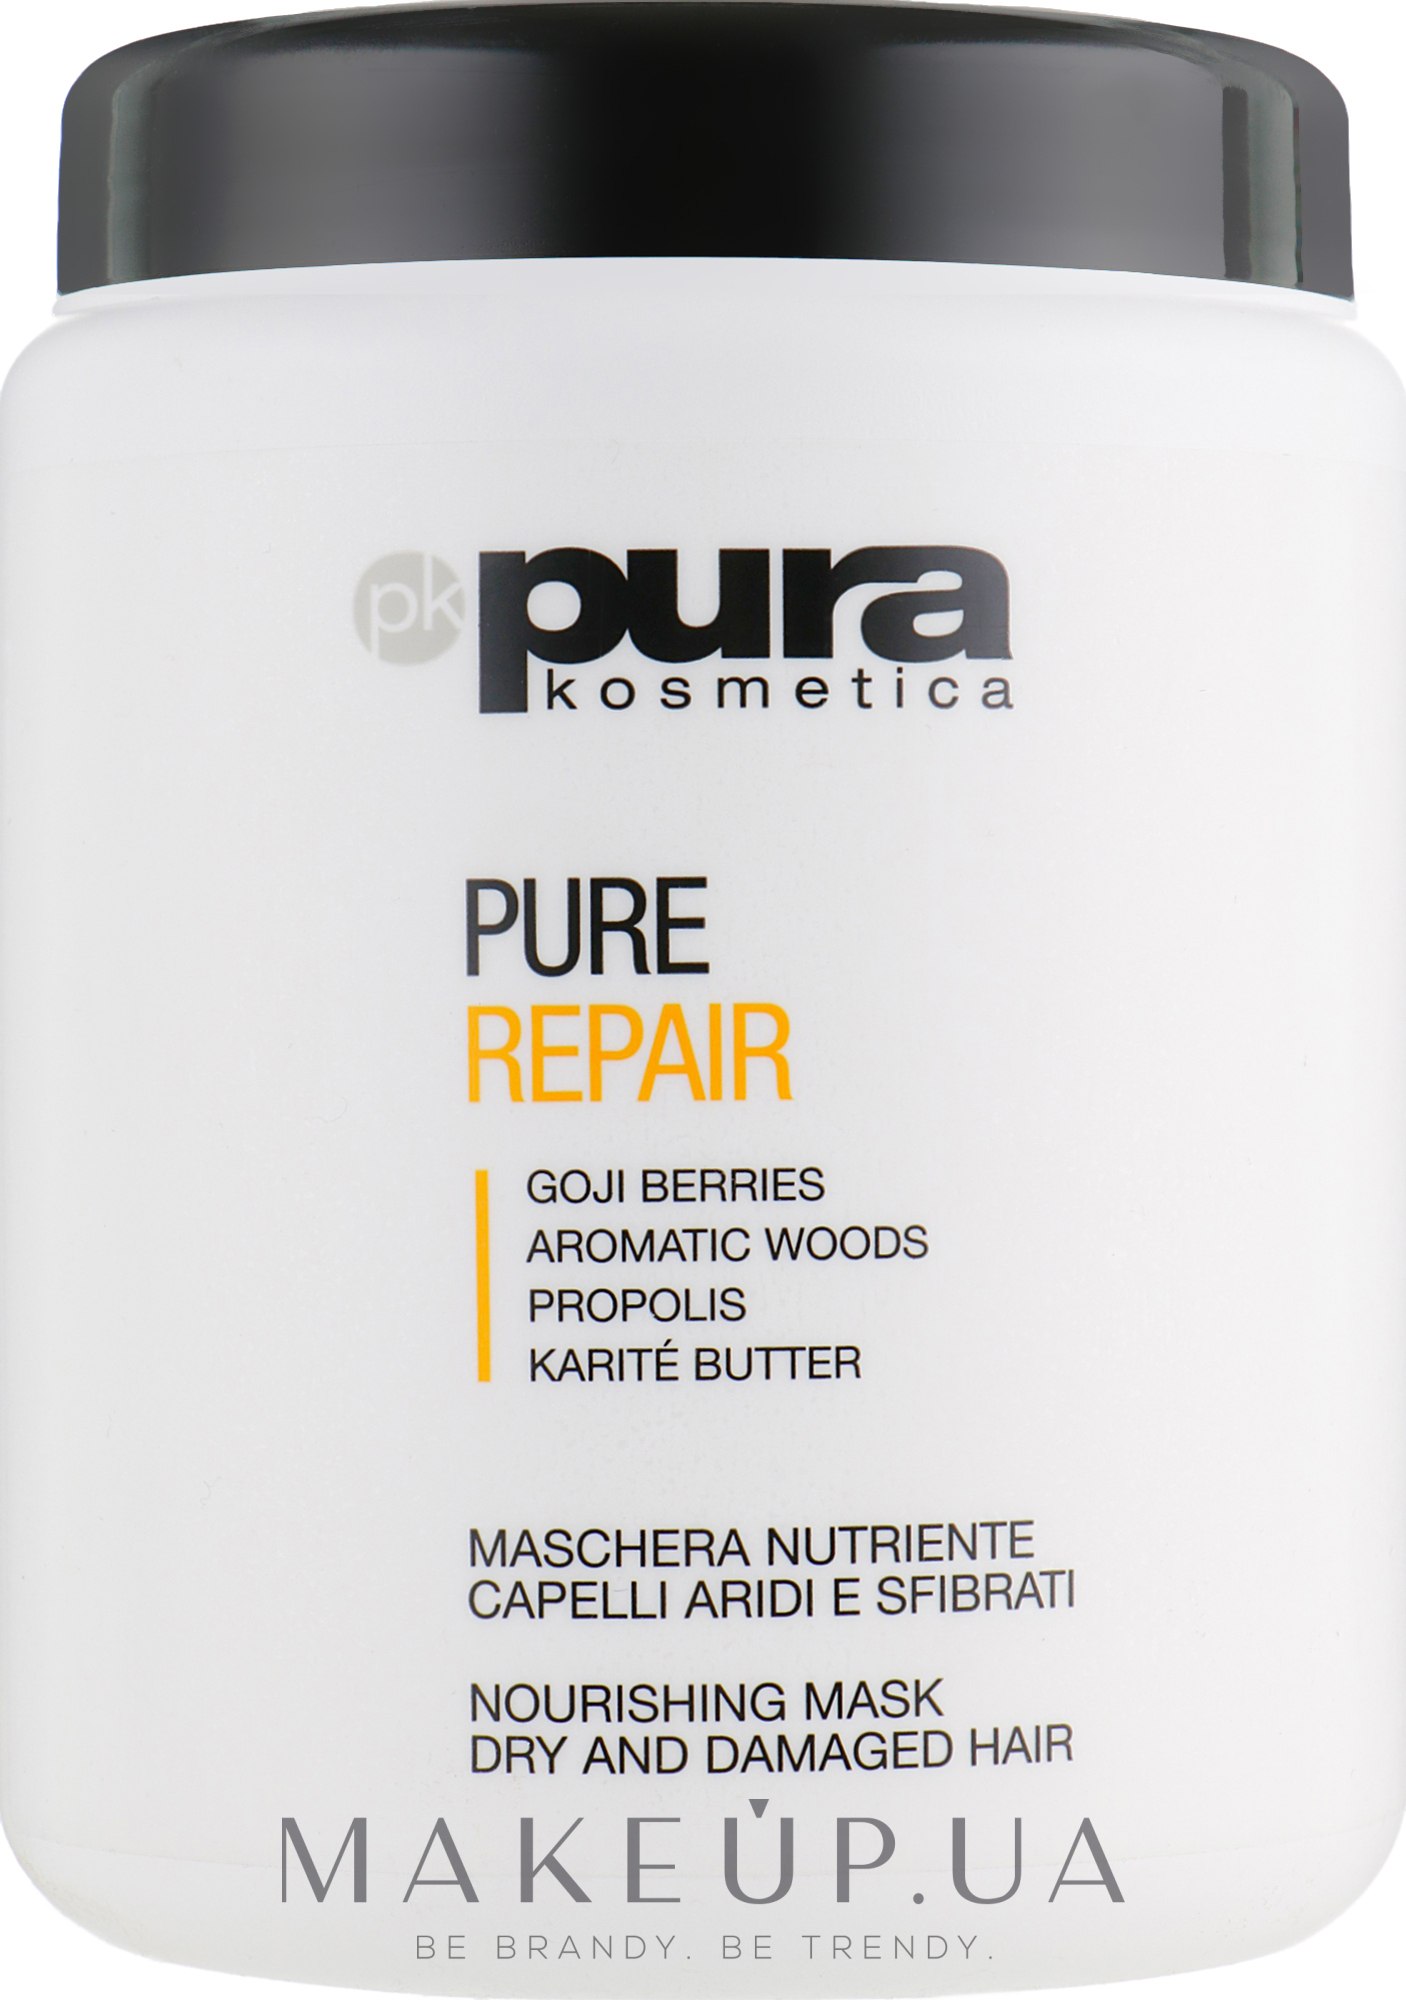 Маска восстанавливающая - Pura Kosmetica Pure Repair  — фото 1000ml